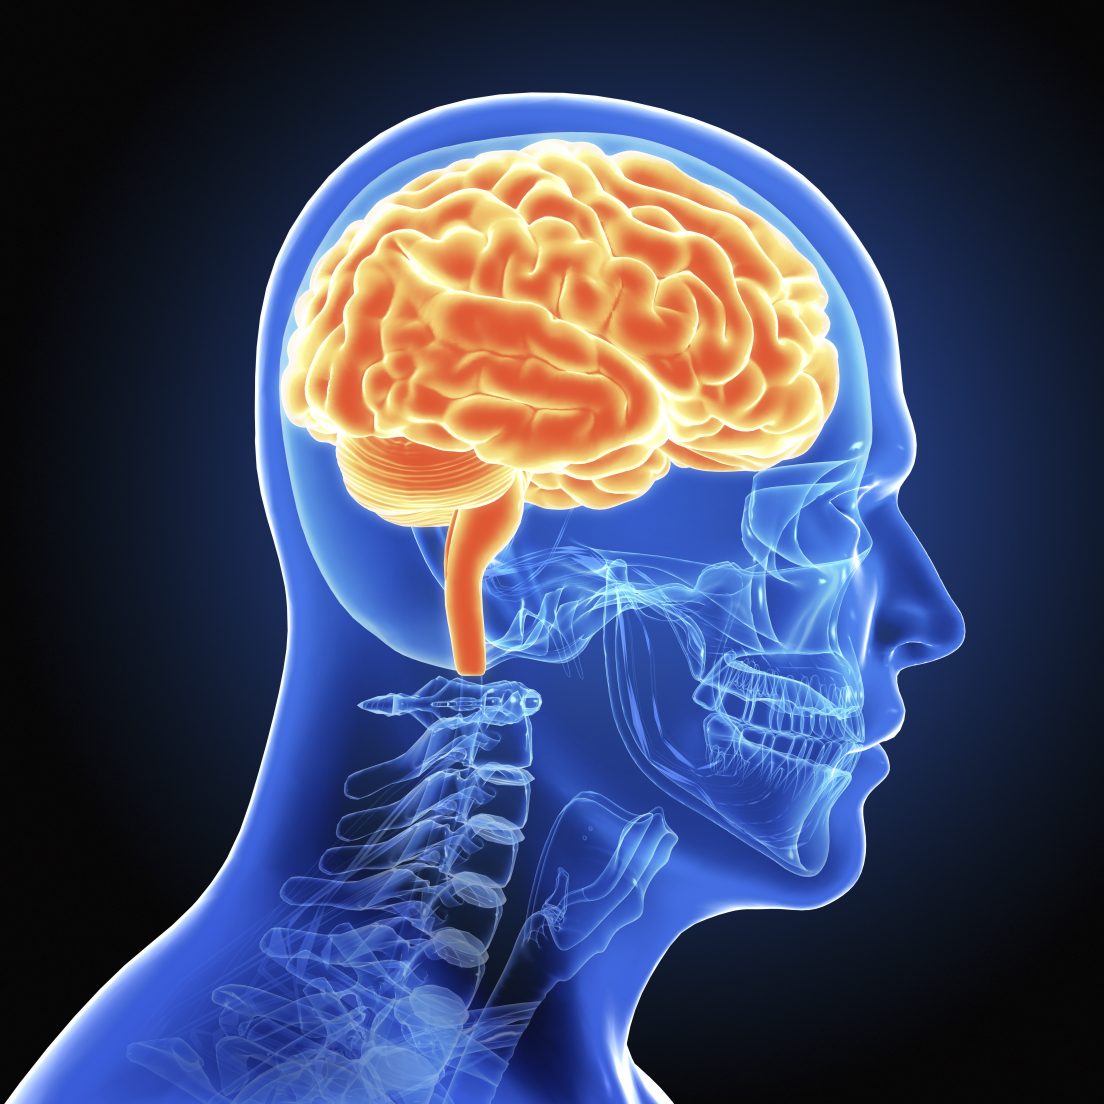 Human Male Brain Scan Image By Cgtoolbox Ou News